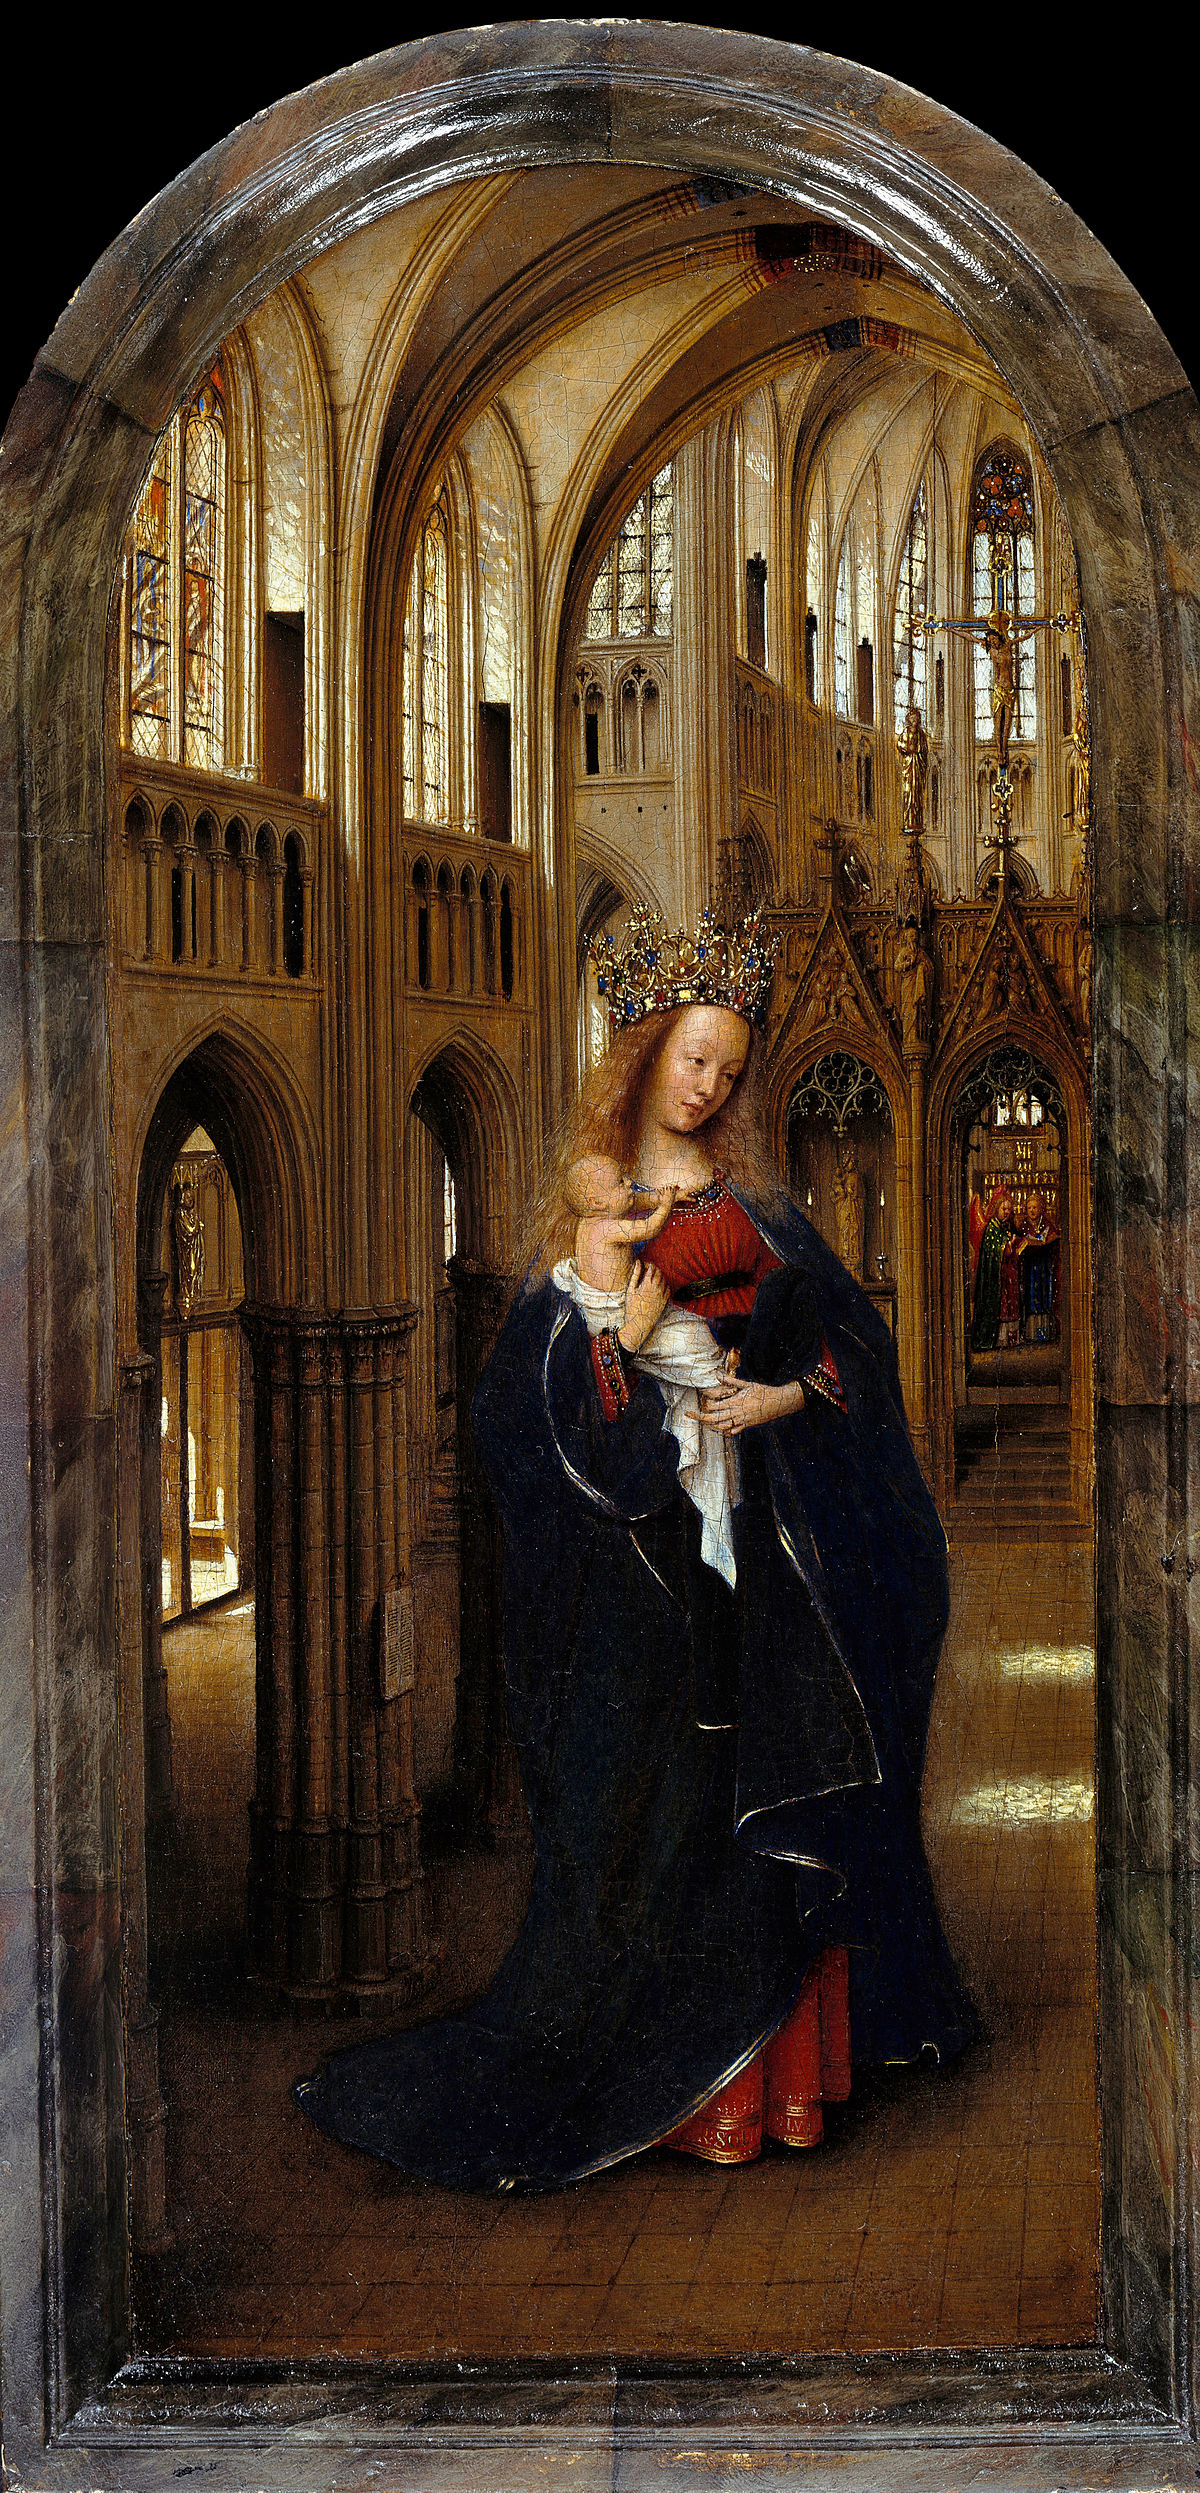 Madonna in the Church - Wikipedia